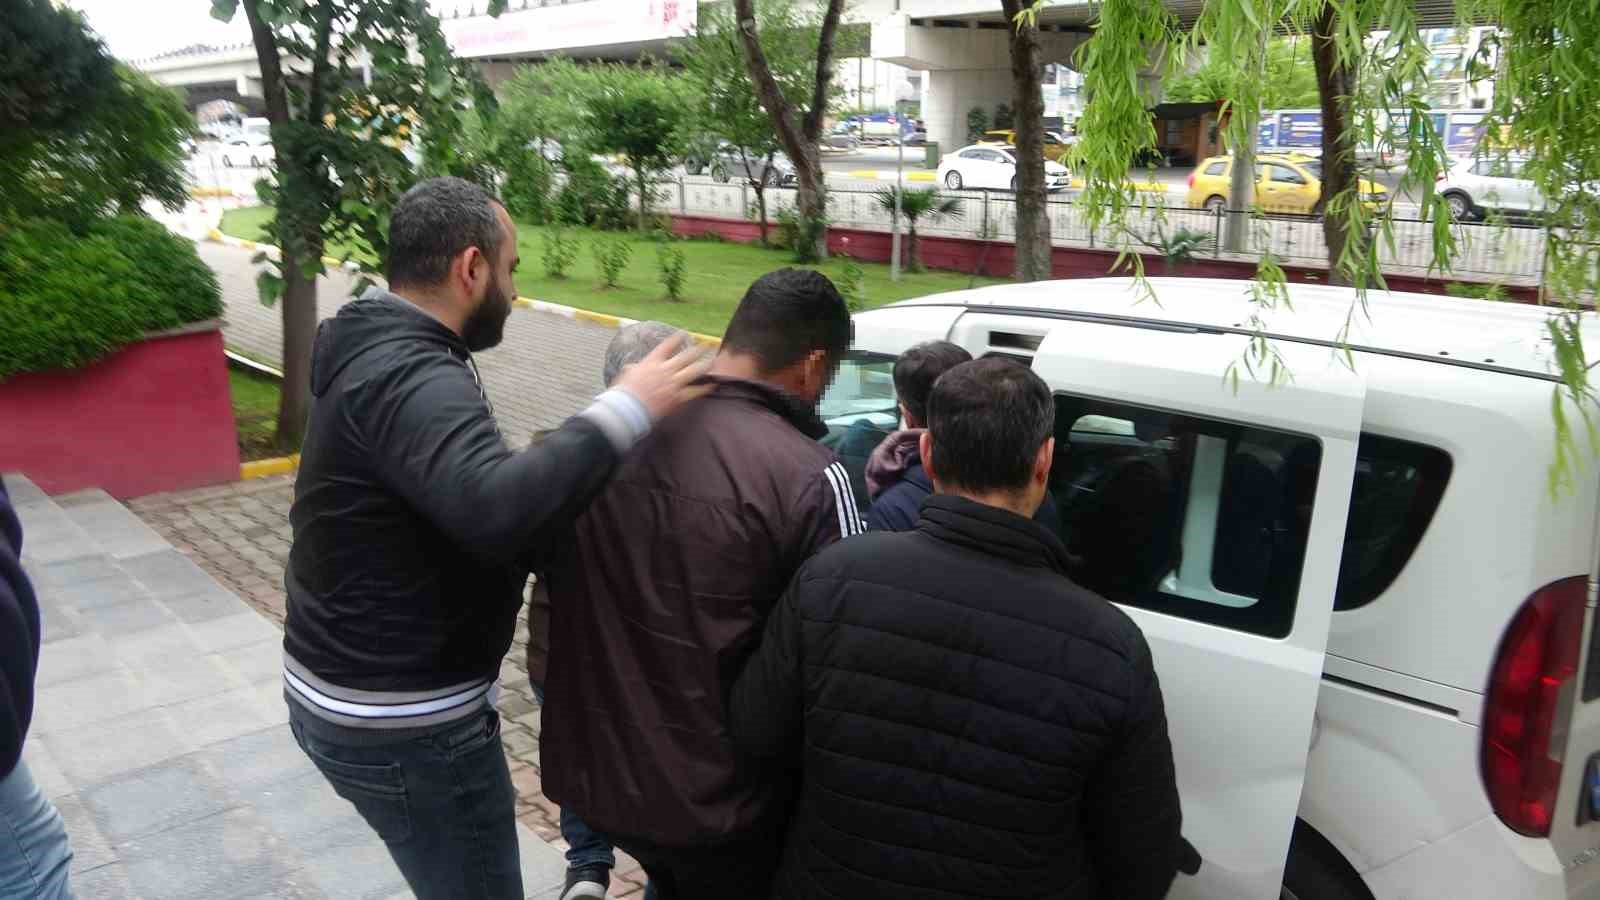 moto kuryelik yapan ogrenciyi hunharca olduren supheli tutuklandi 1 BEPX4YqS